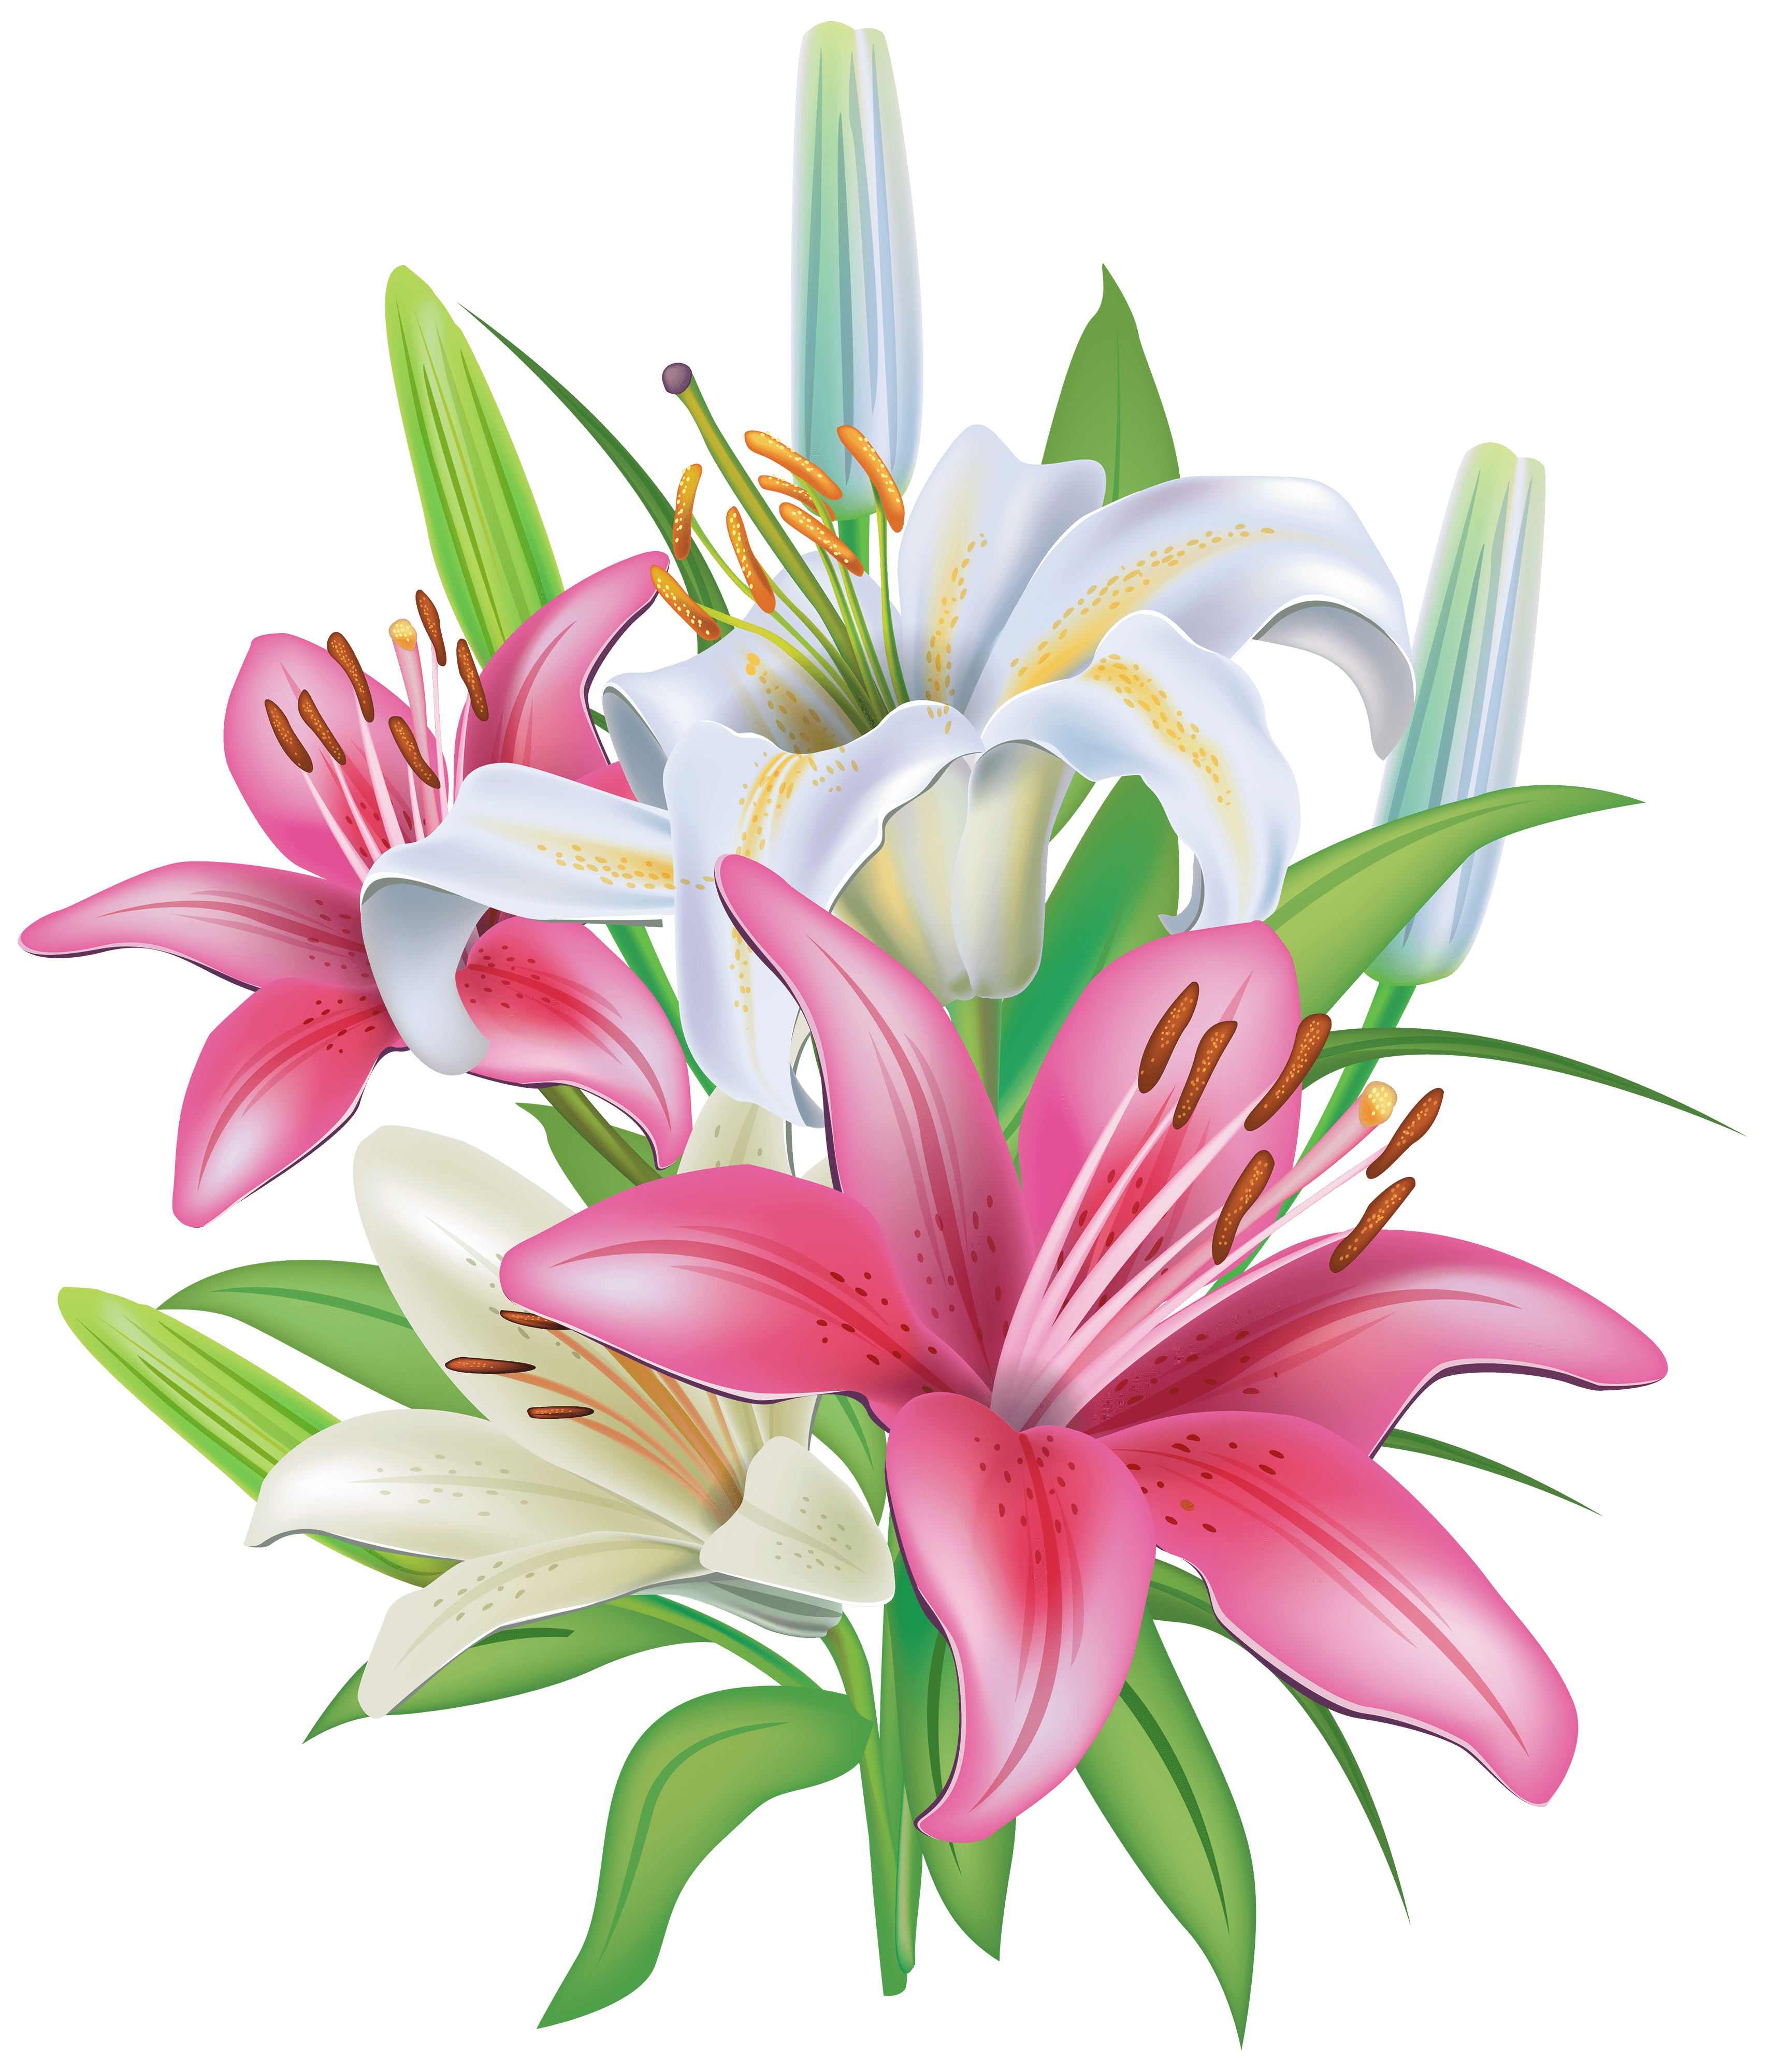 Lilies Flowers Decoration PNG Clipart Image